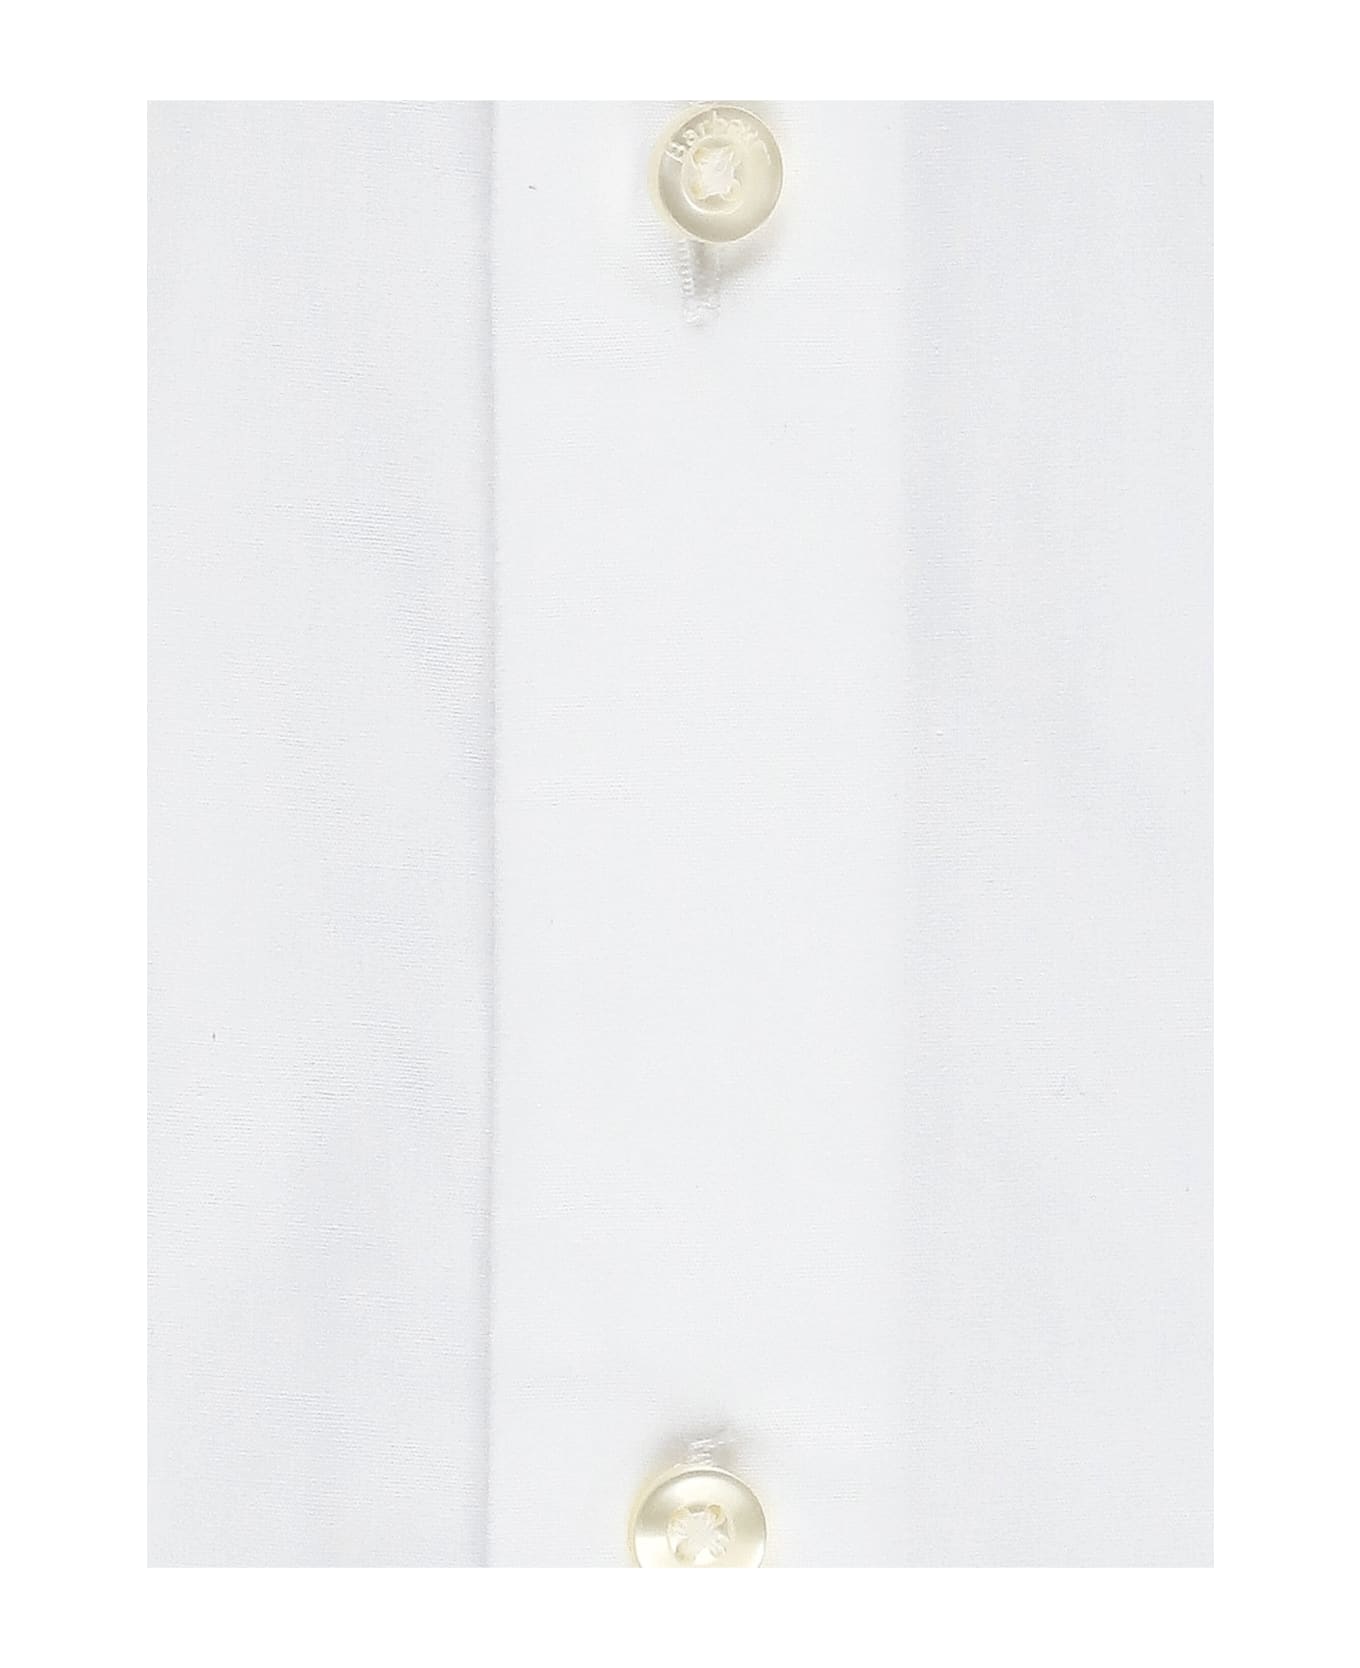 Barbour Logoed Shirt - White シャツ